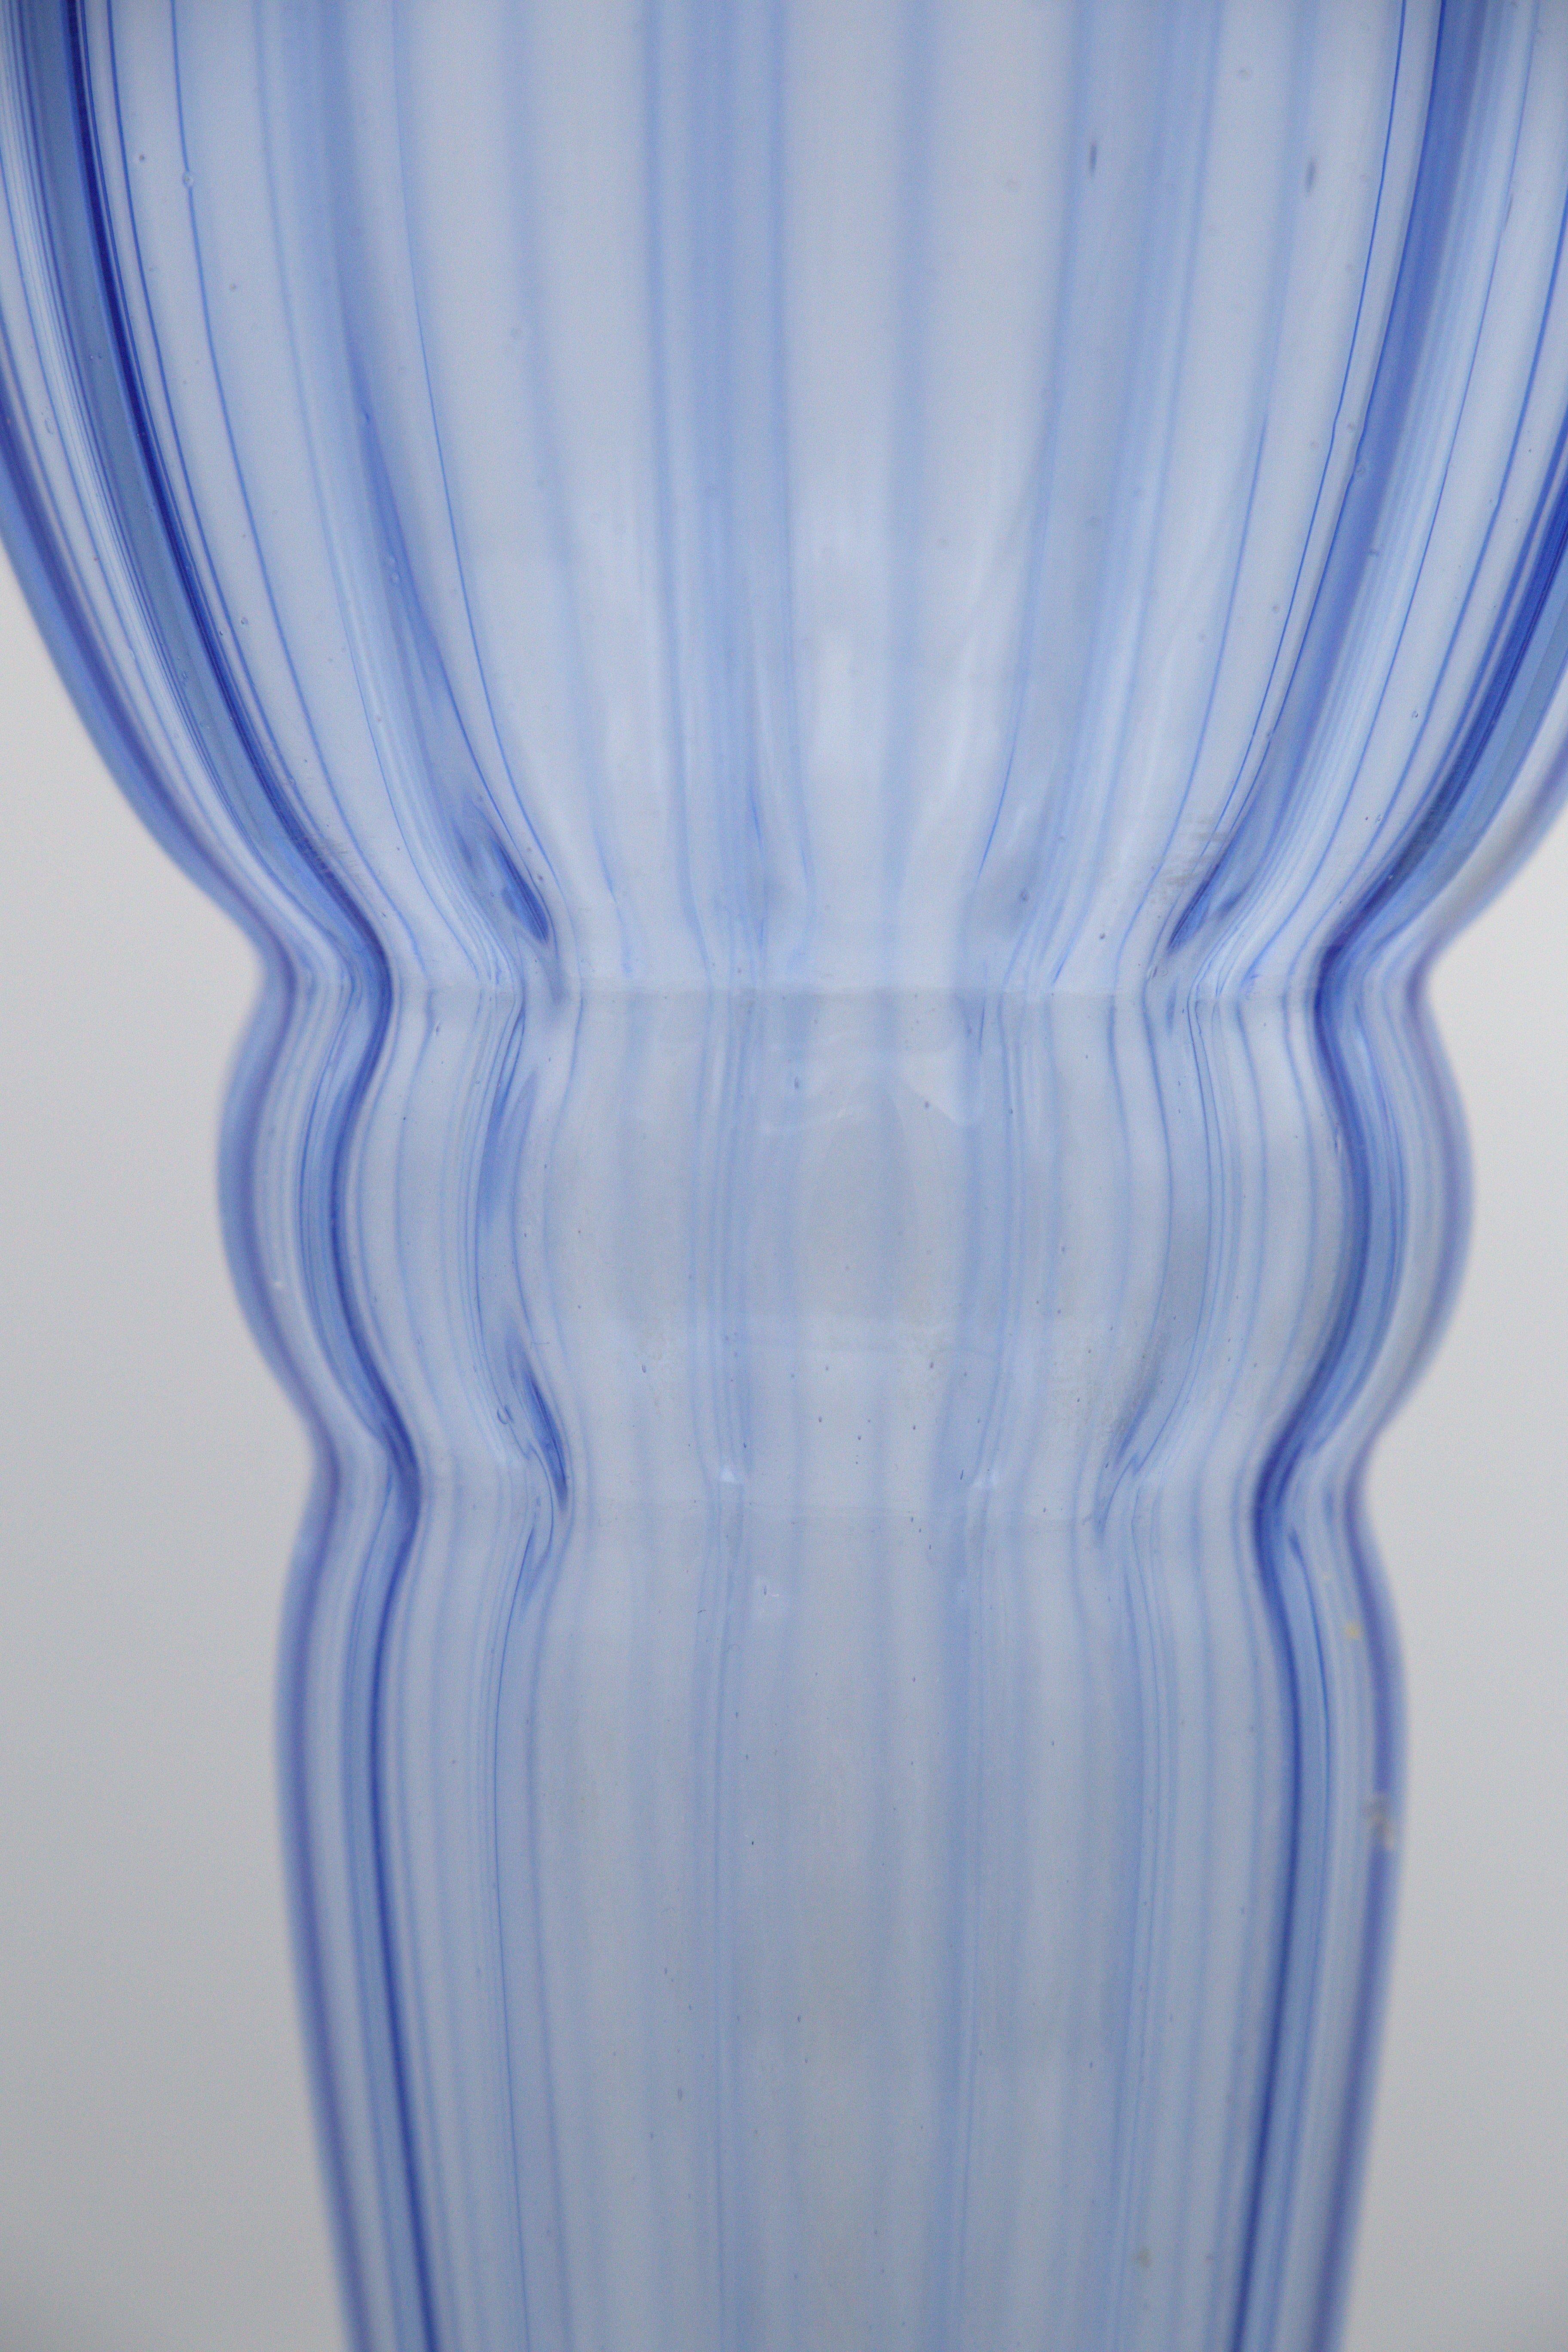 Italian Vintage Glass Vase by Napoleone Martinuzzi for Zecchin For Sale